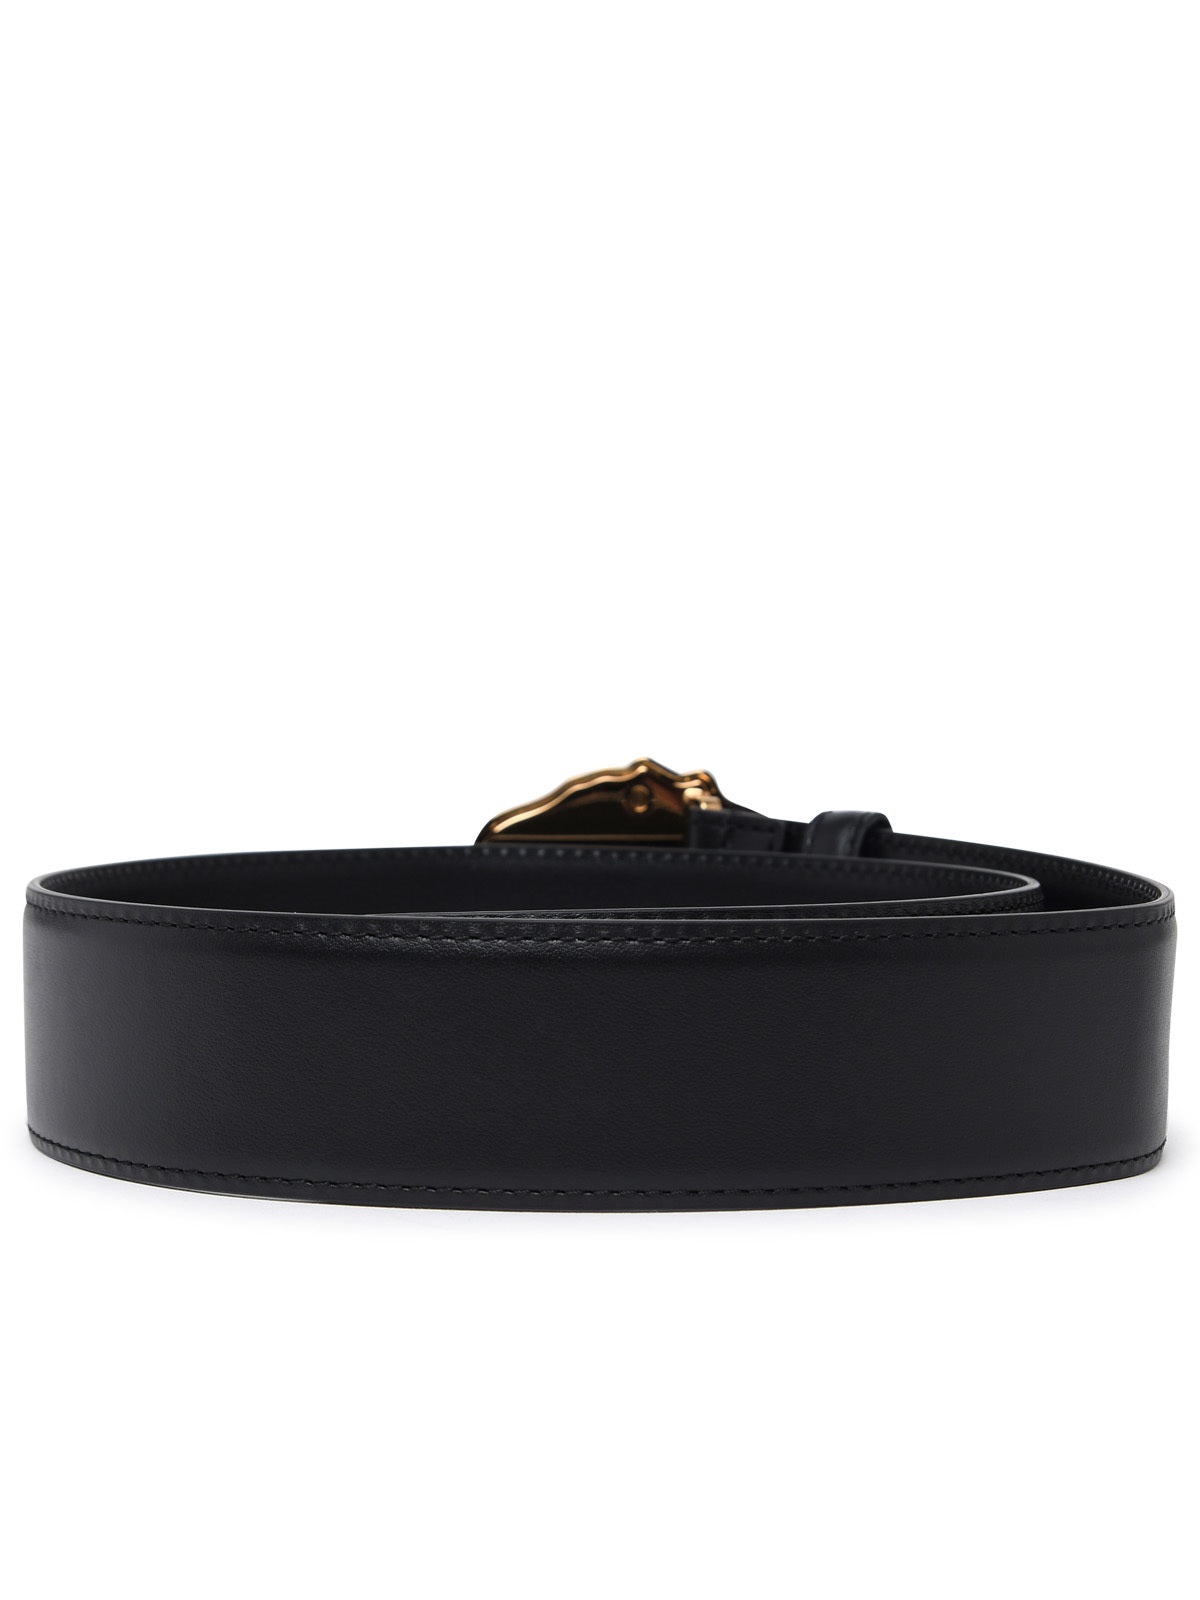 Versace Woman Black Leather Belt - 3